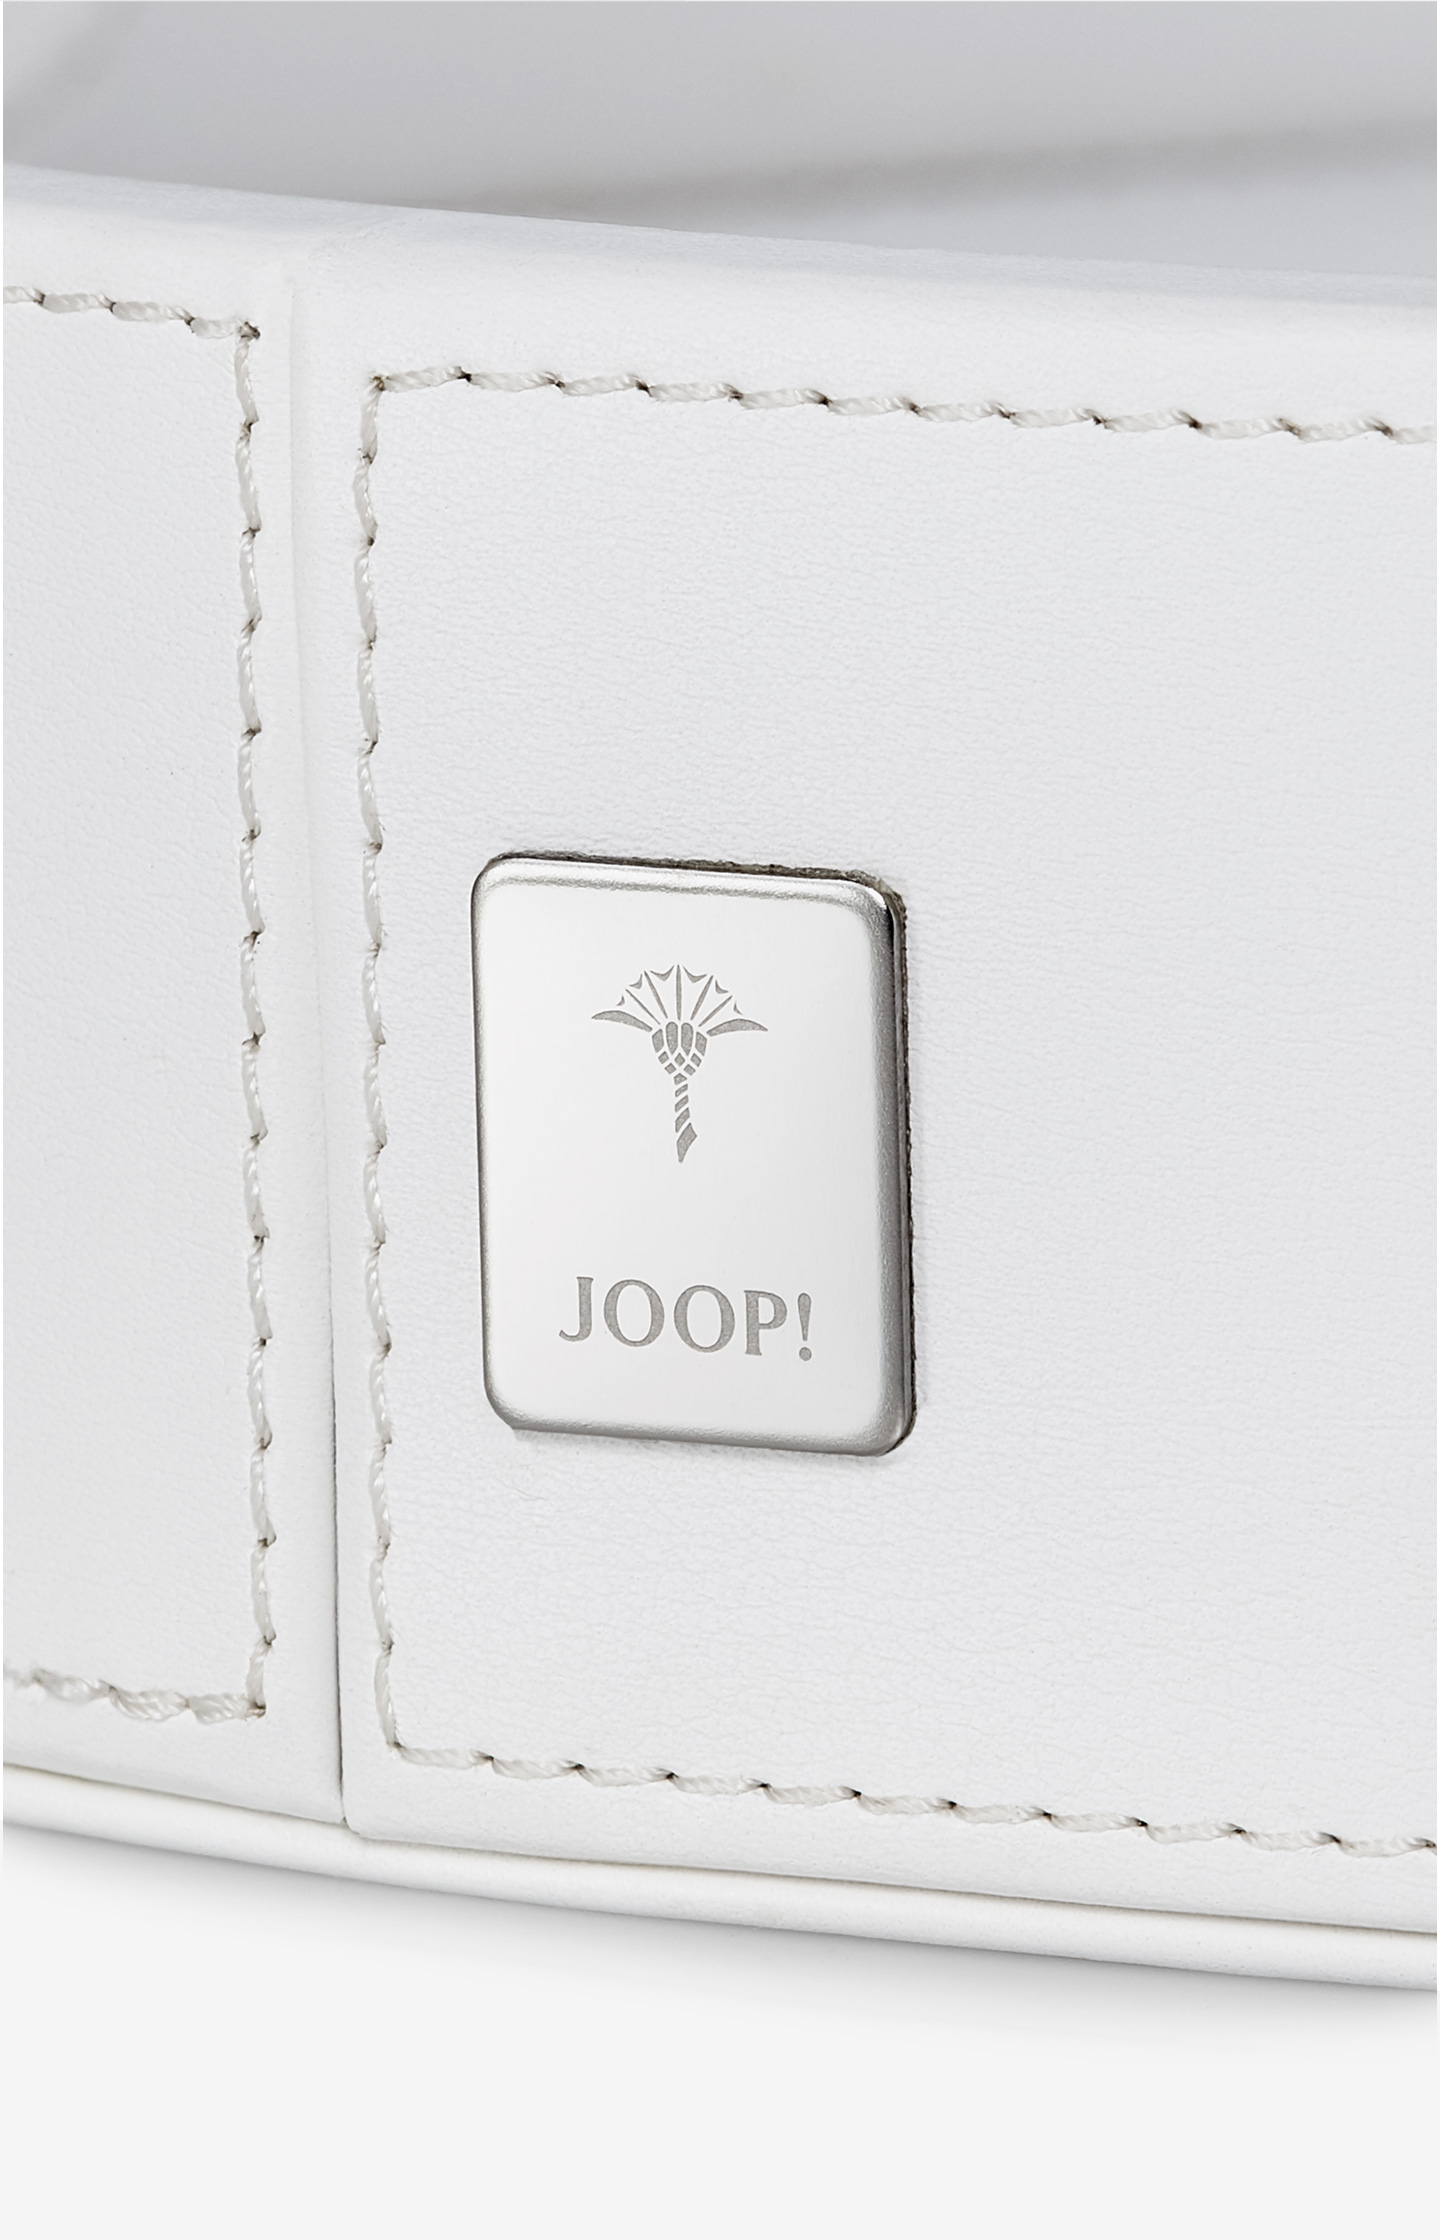 JOOP! Homeline - Rundes Tablett in Weiß, klein - im JOOP! Online-Shop